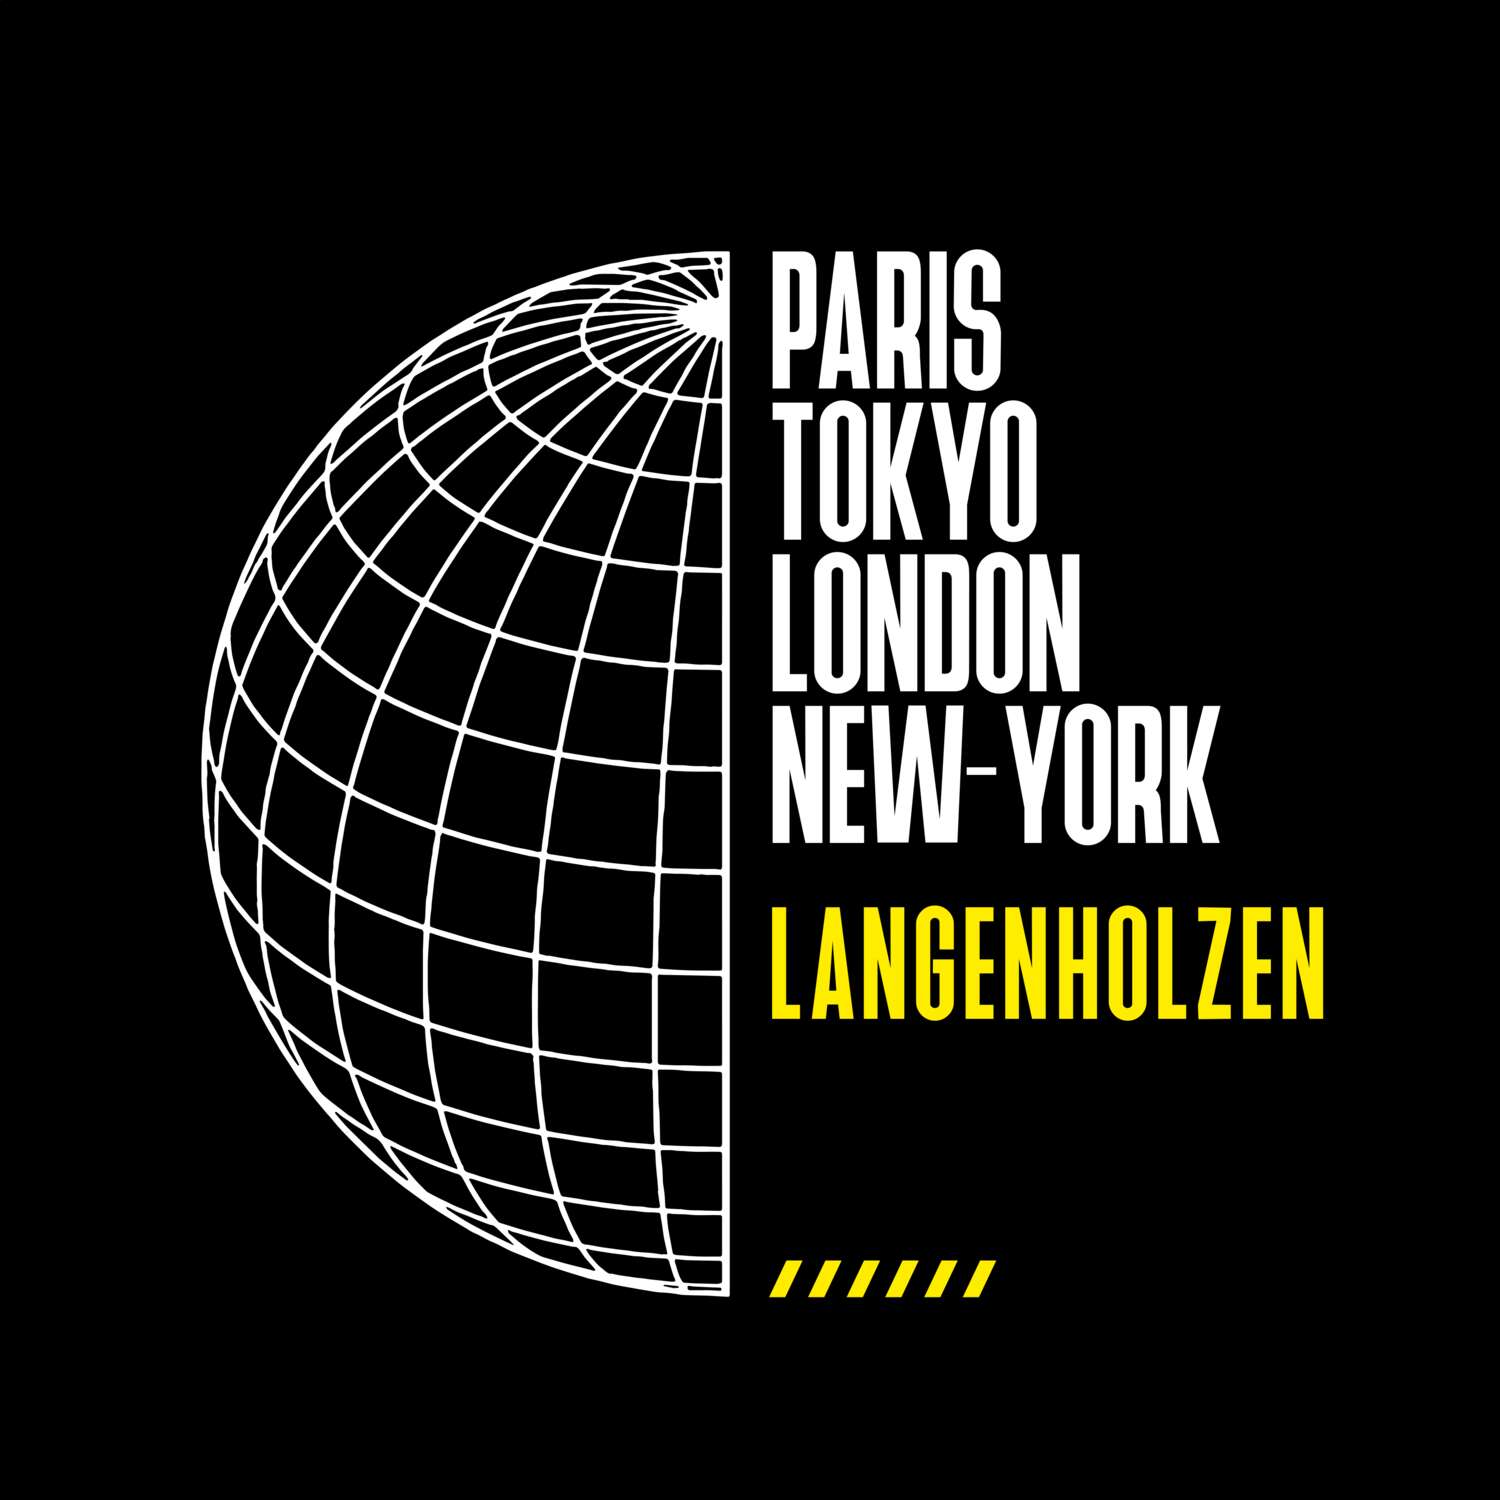 Langenholzen T-Shirt »Paris Tokyo London«